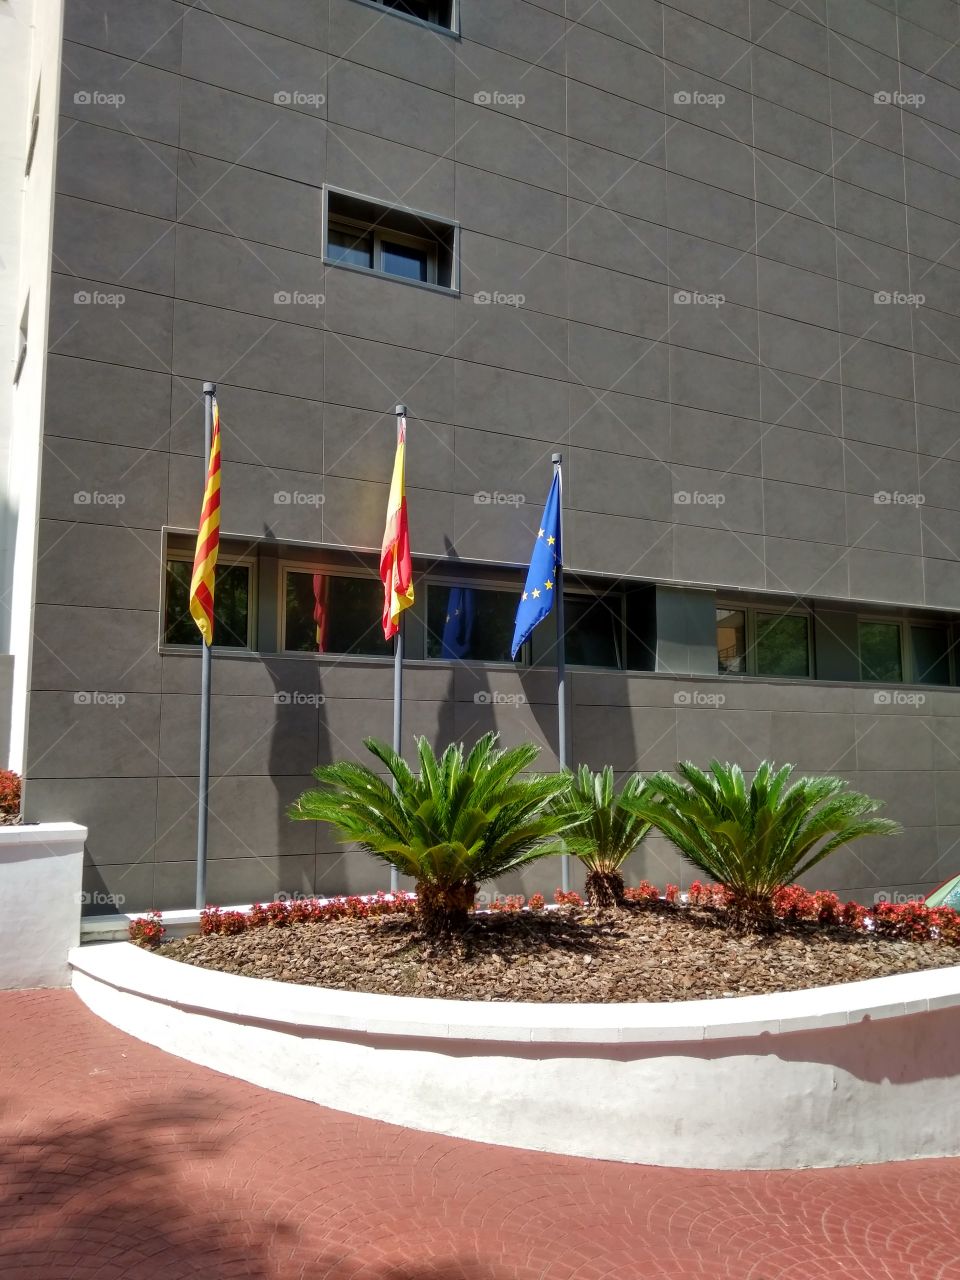 Flags Spanish